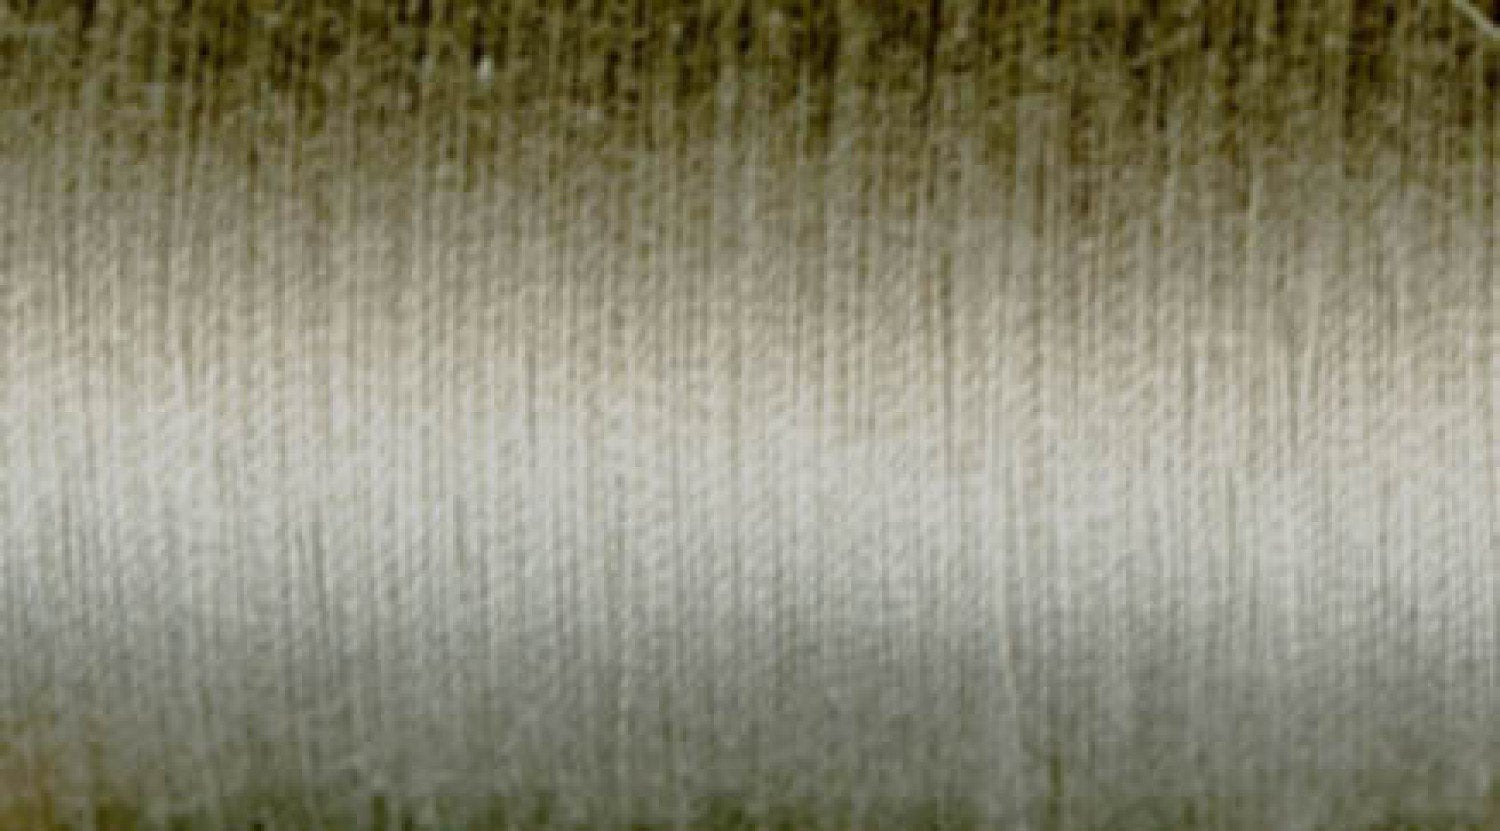 Colonial Organic Cotton Thread - 4831 Sand